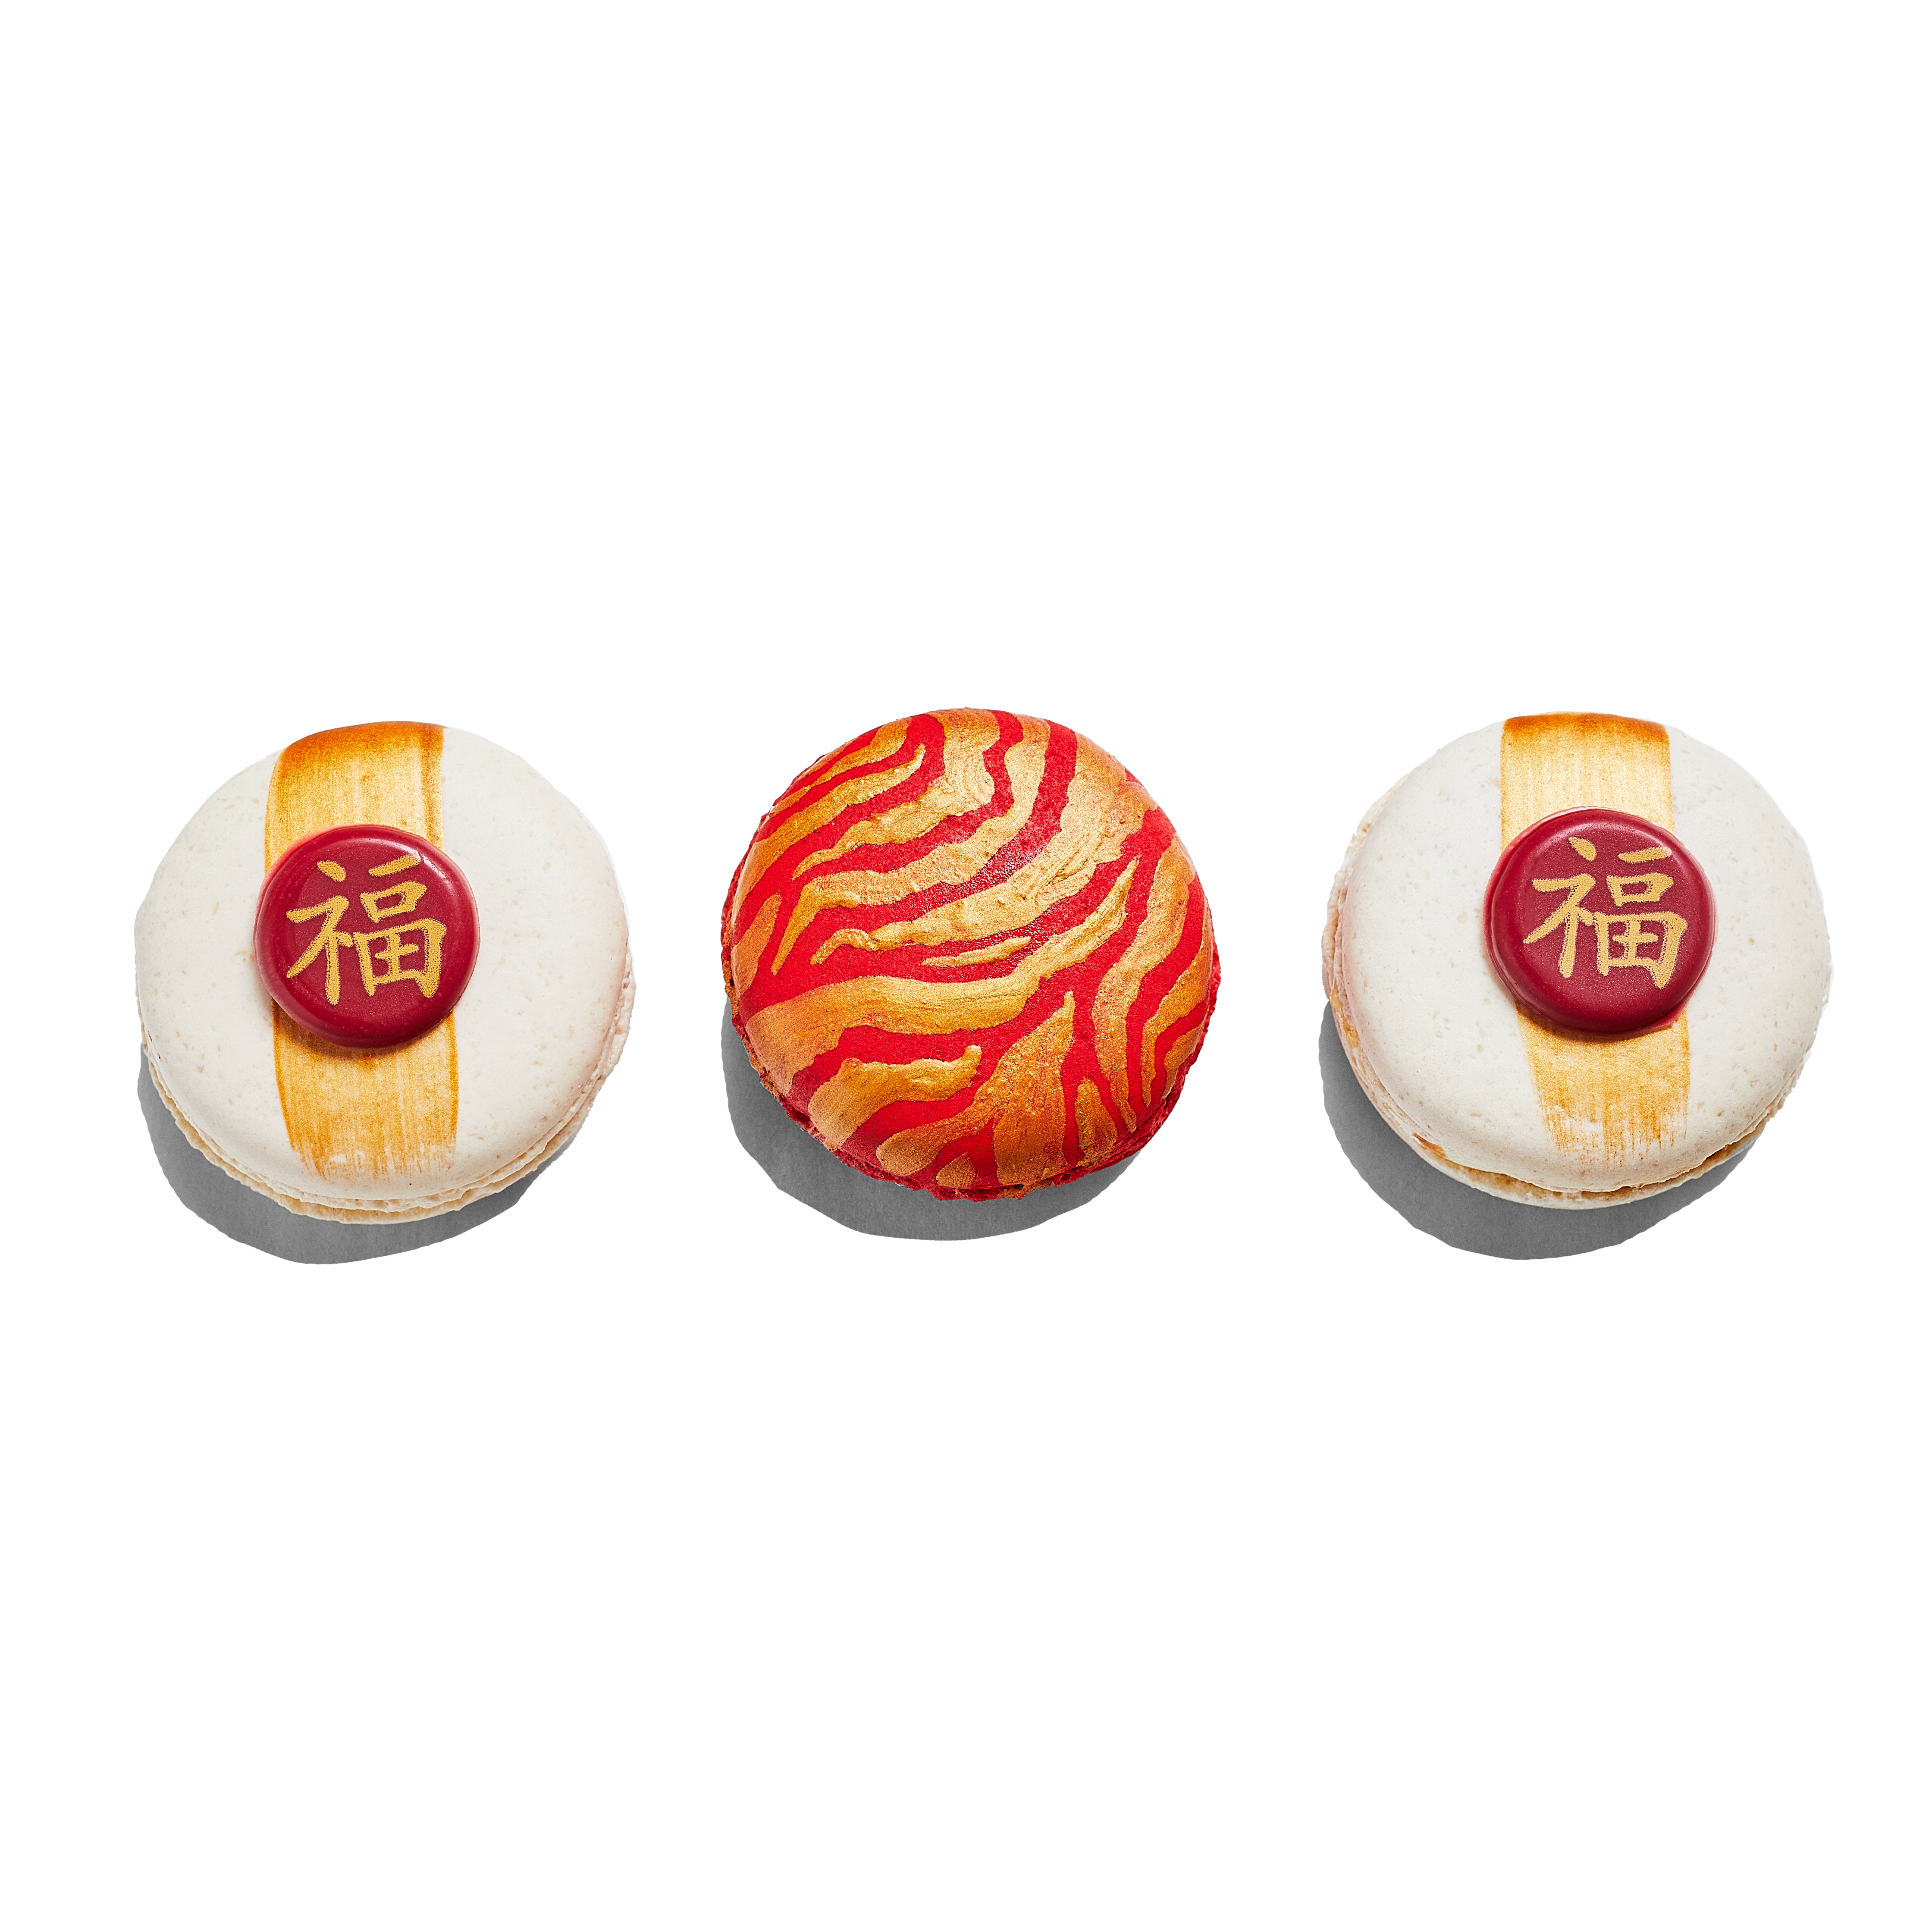 Lunar New Year Macarons